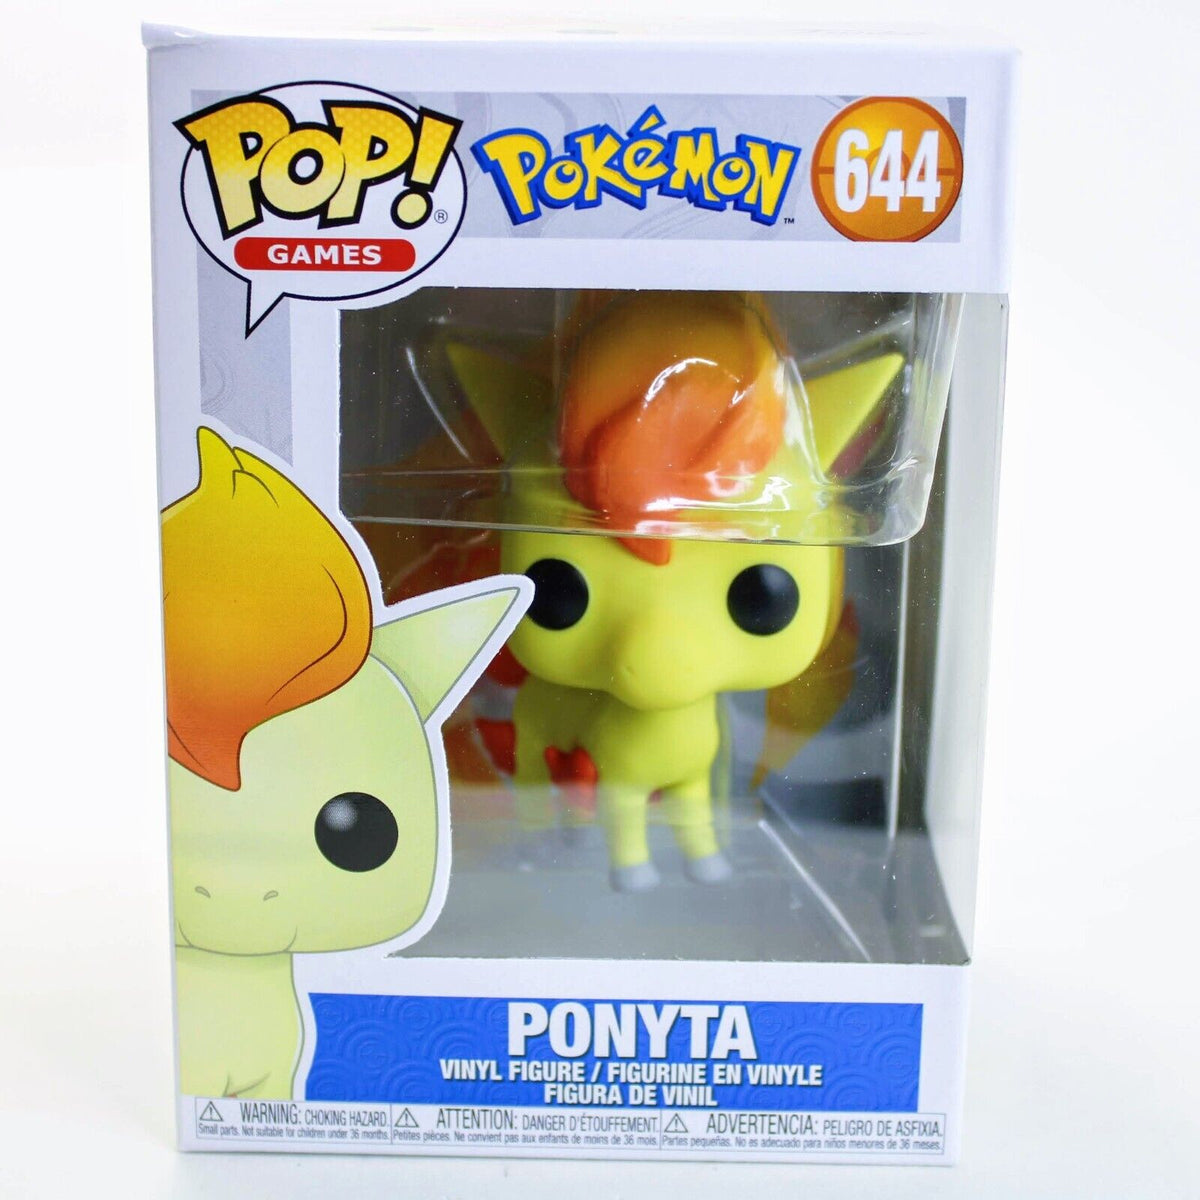 Funko Pop Pokemon Games Ponyta - Vinyl Figure # 644 S6 – Blueberry Cat